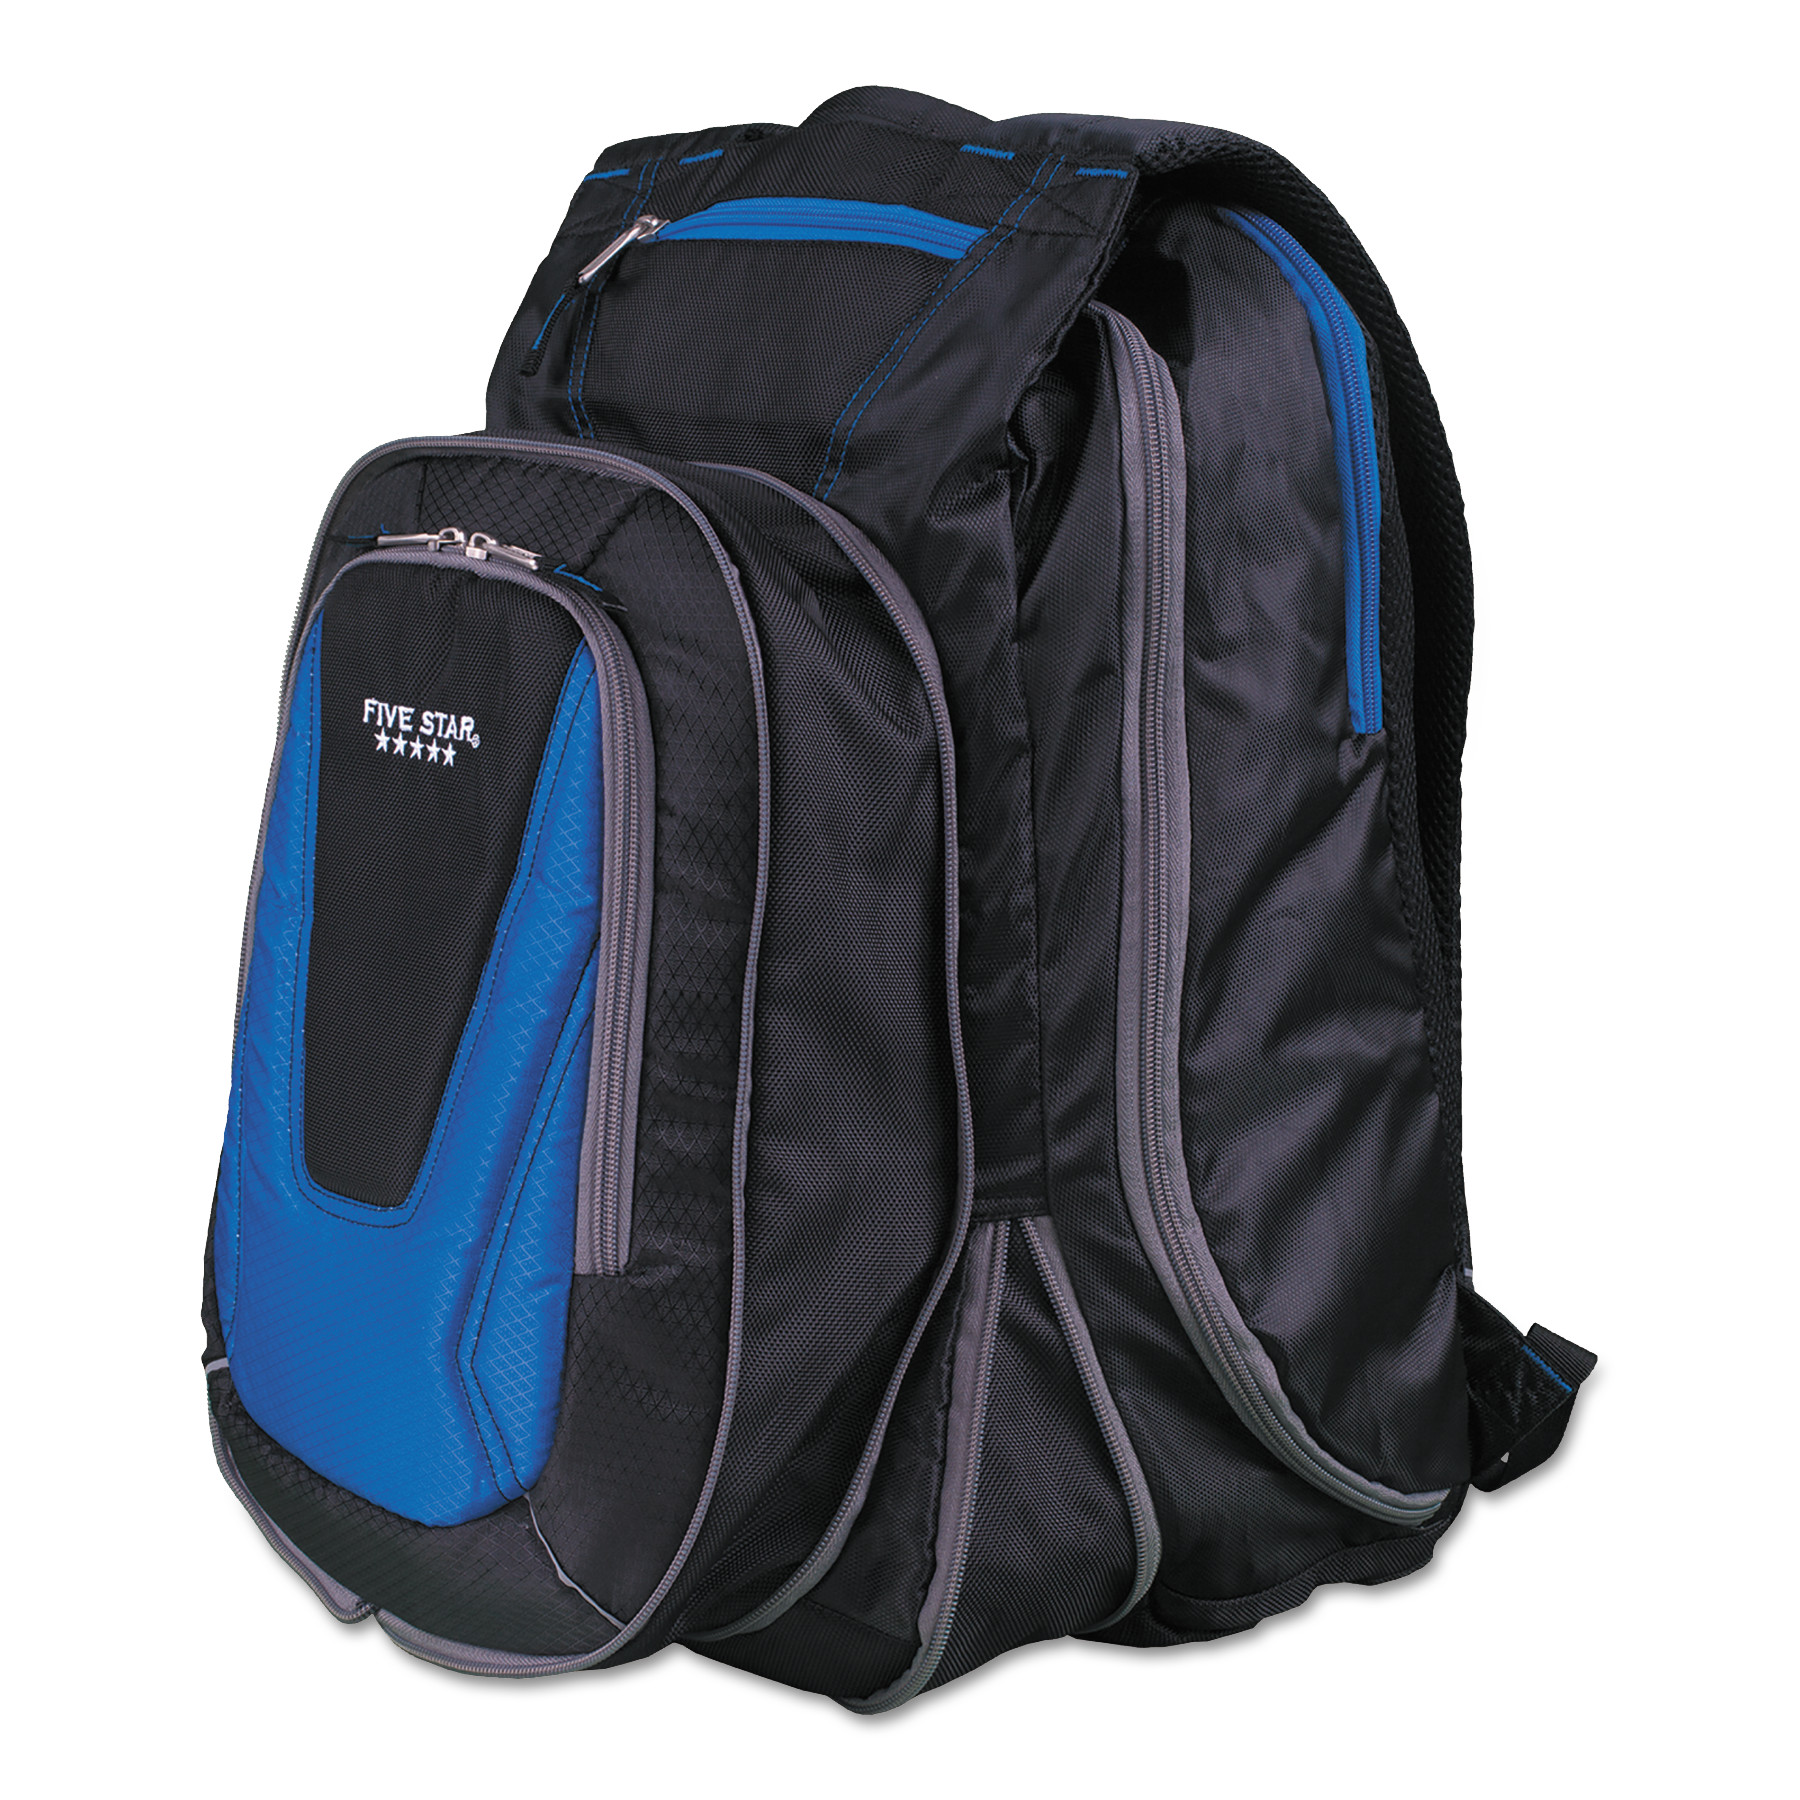  Five Star 73417 Expandable Backpack, 14 x 8 x 19, Blue/Black (MEA73417) 